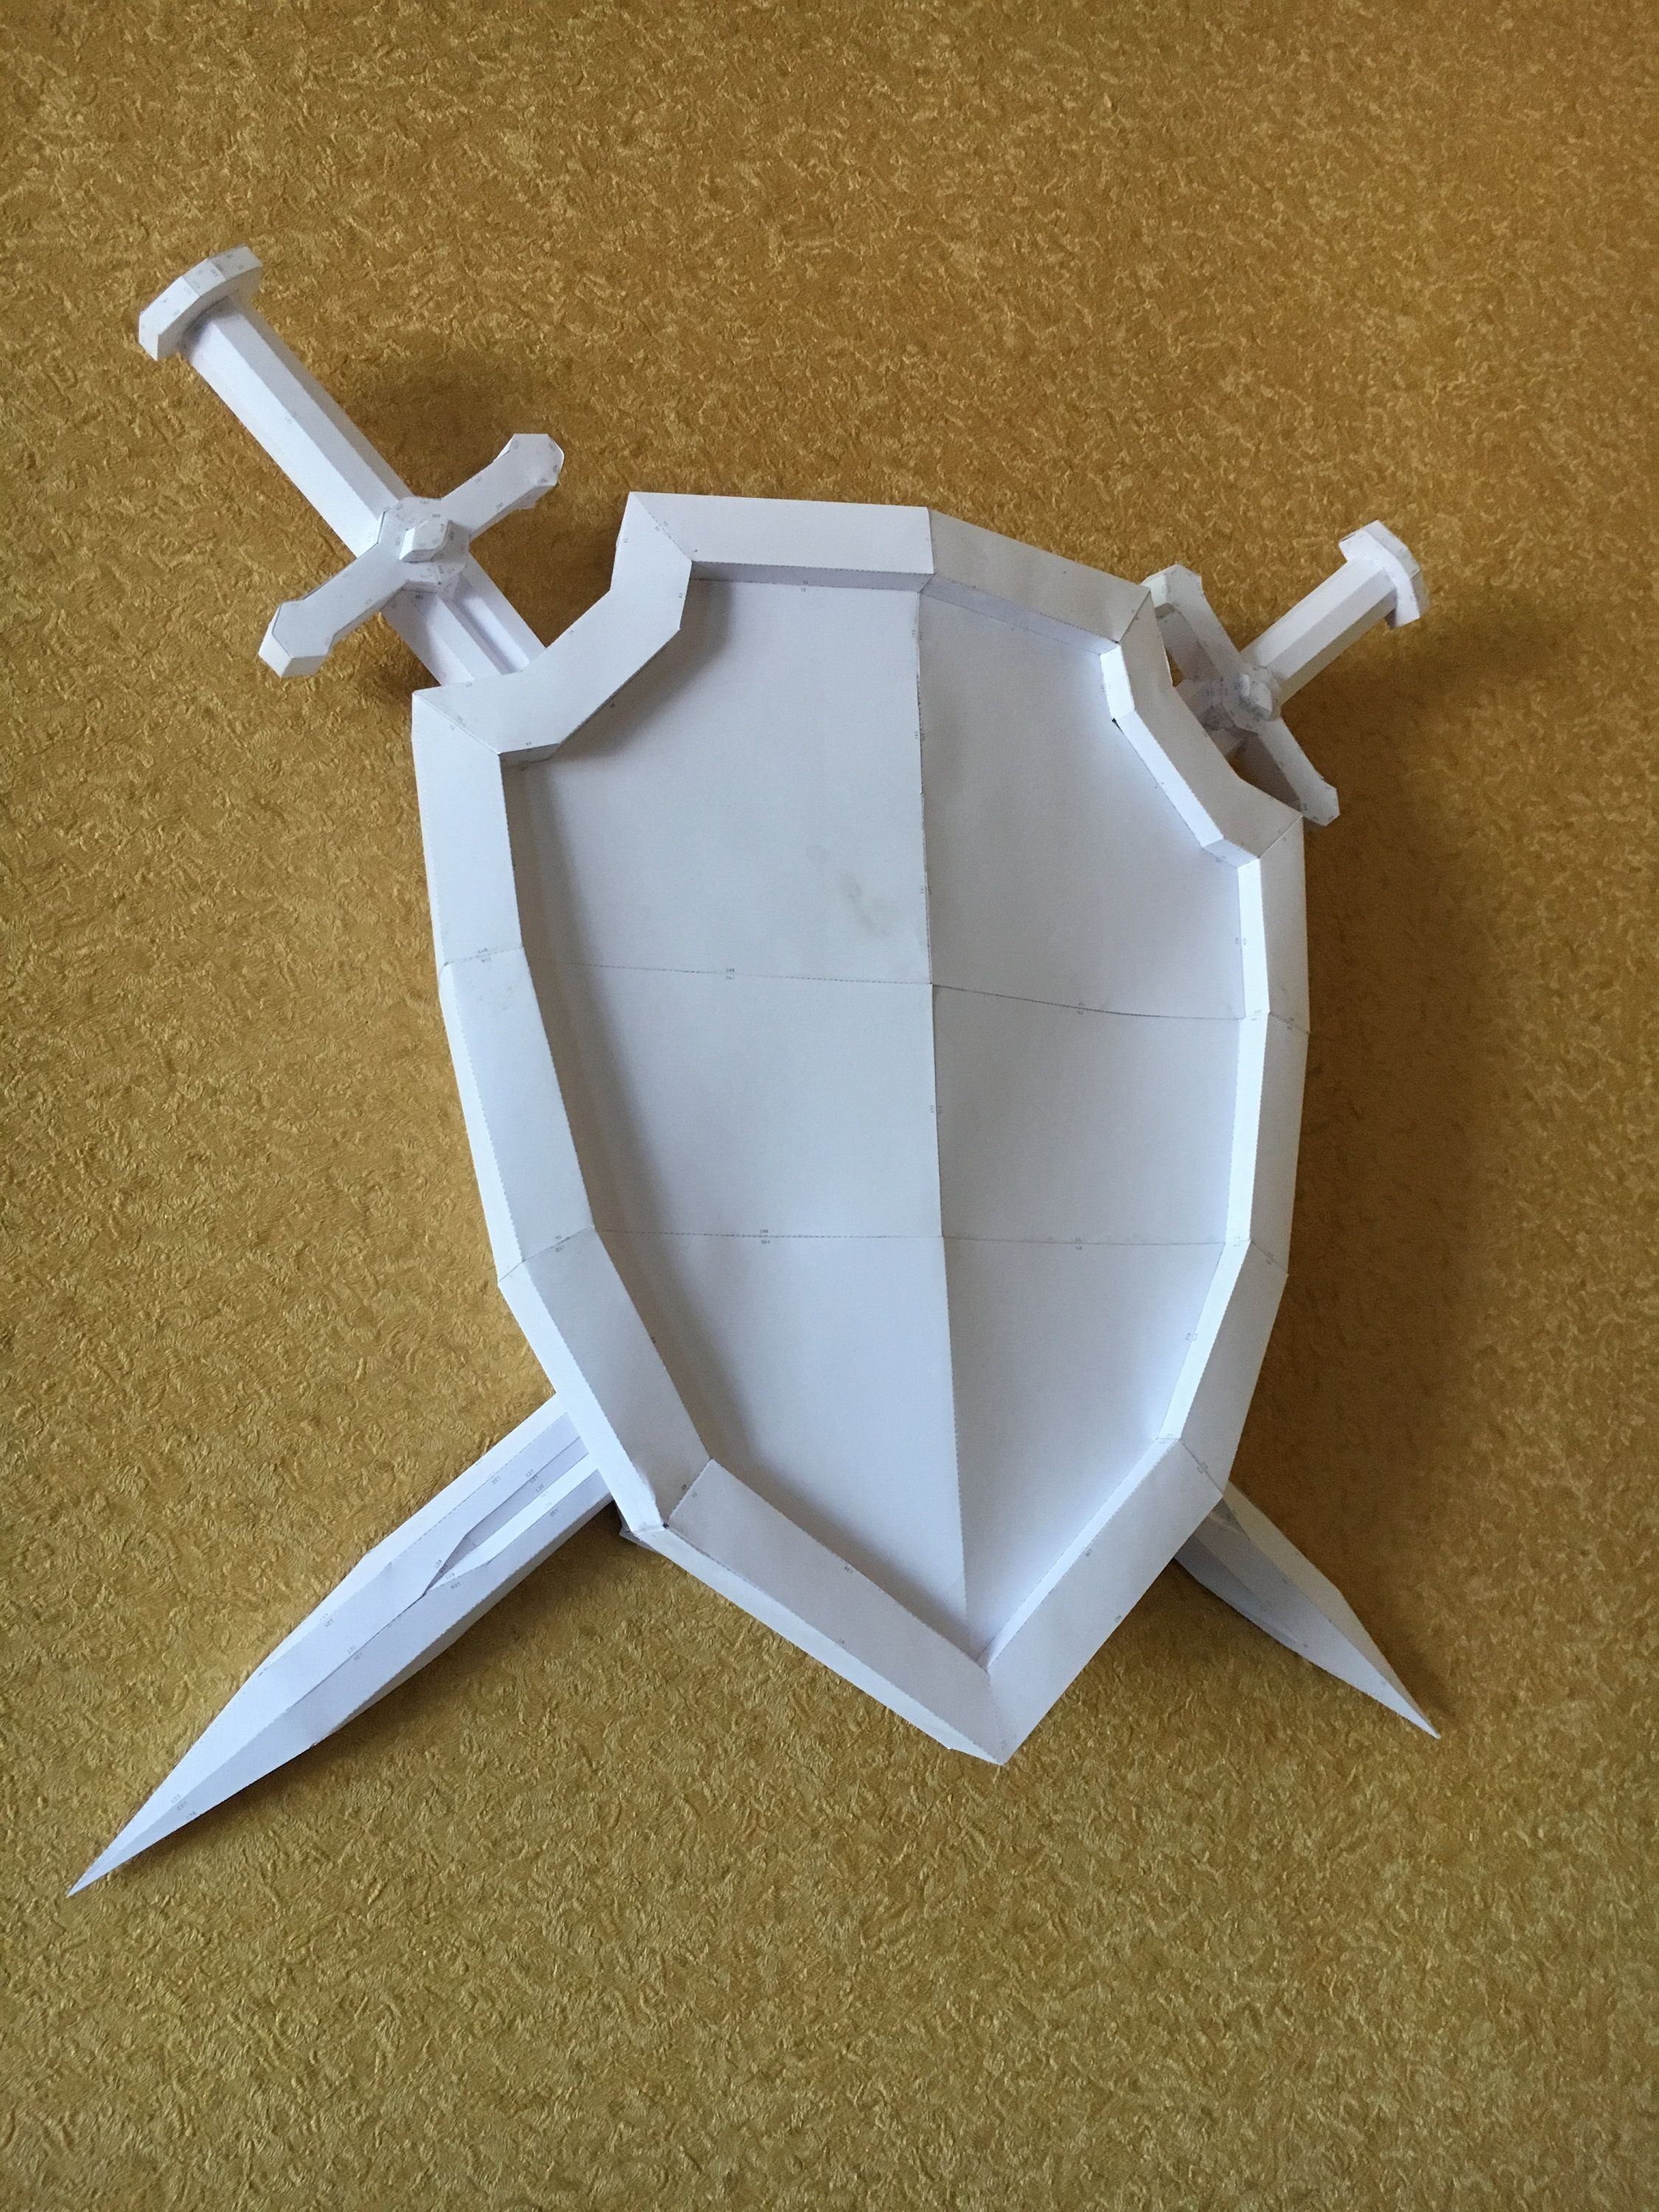 Papercraft Sword Sword Shield Diy Papercraft Model ÐÑÐ¼Ð°Ð¶Ð½ÑÐµ Ð¸Ð·Ð´ÐµÐ Ð¸Ñ